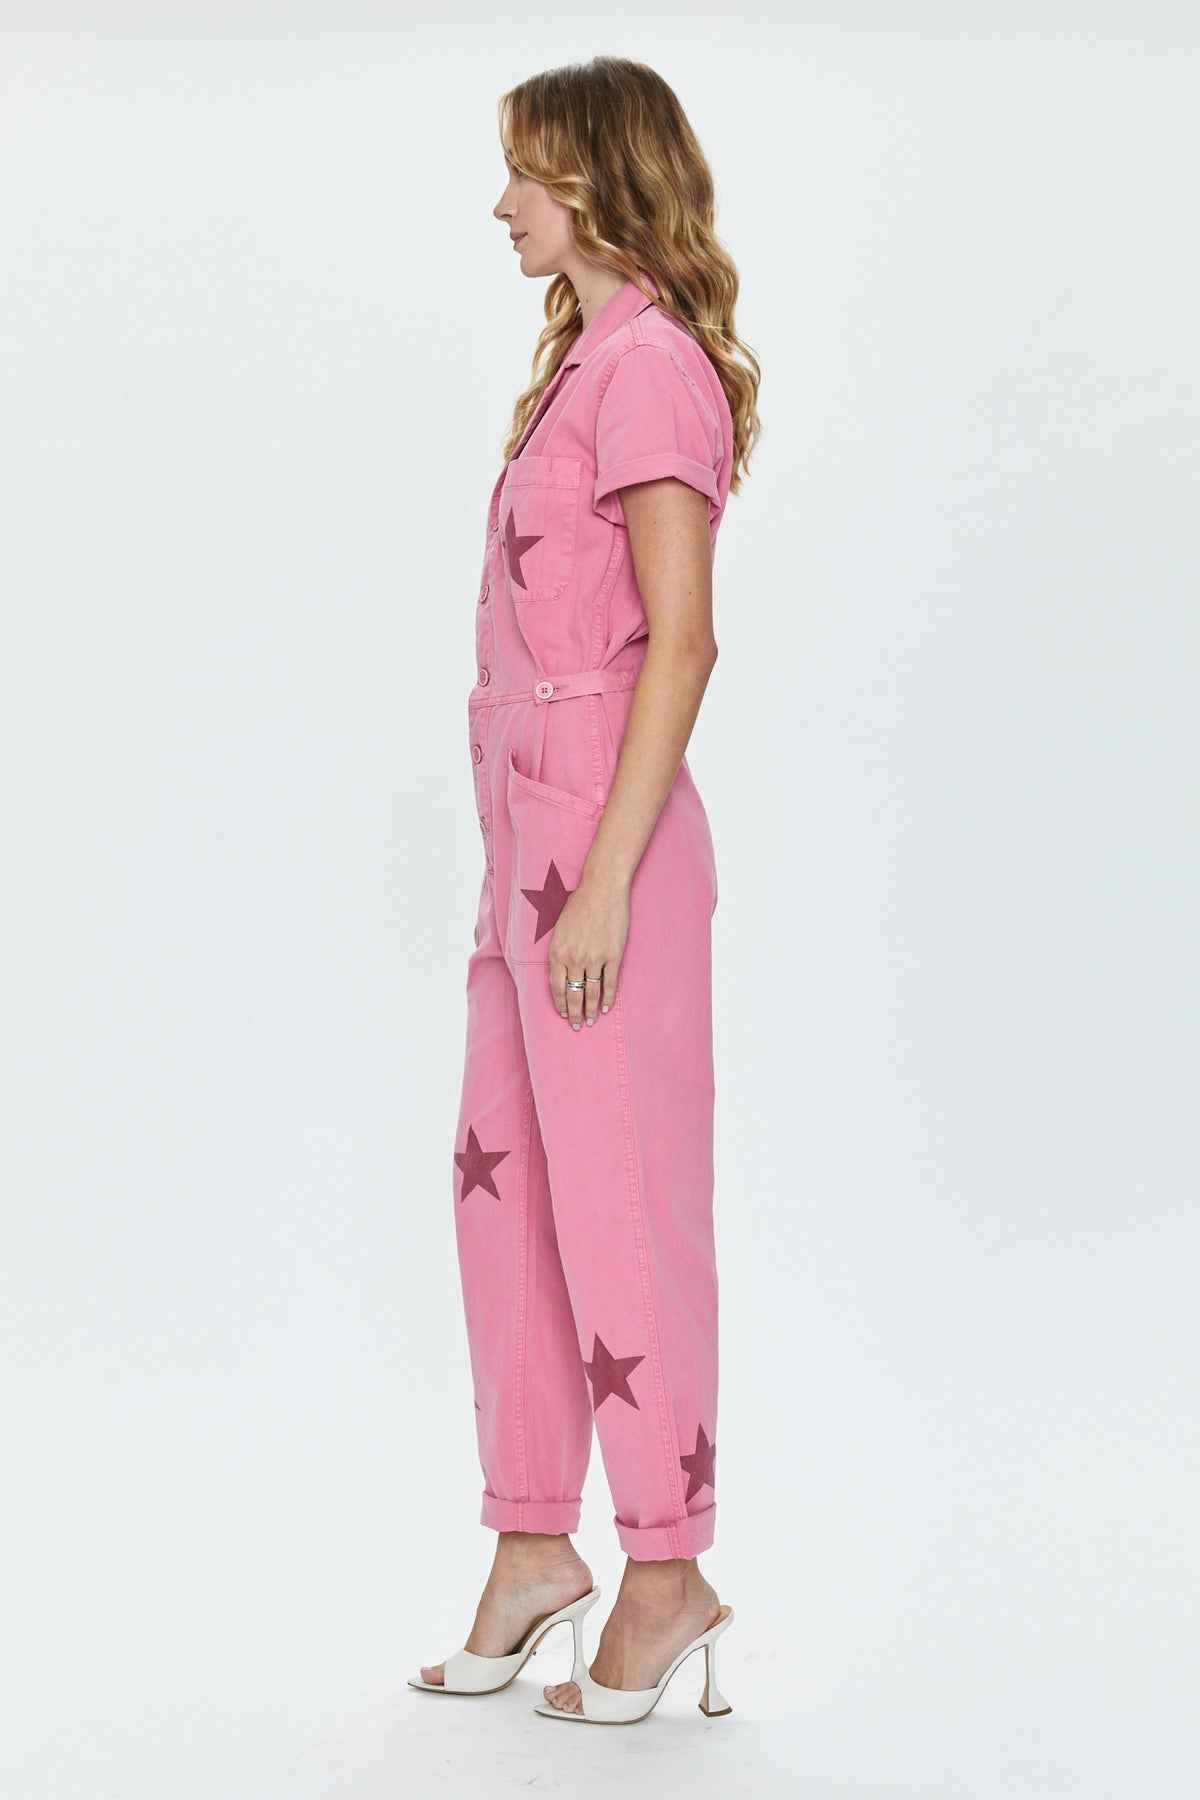 Grover Short Sleeve Field Suit - Royal Flamingo
            
              Sale